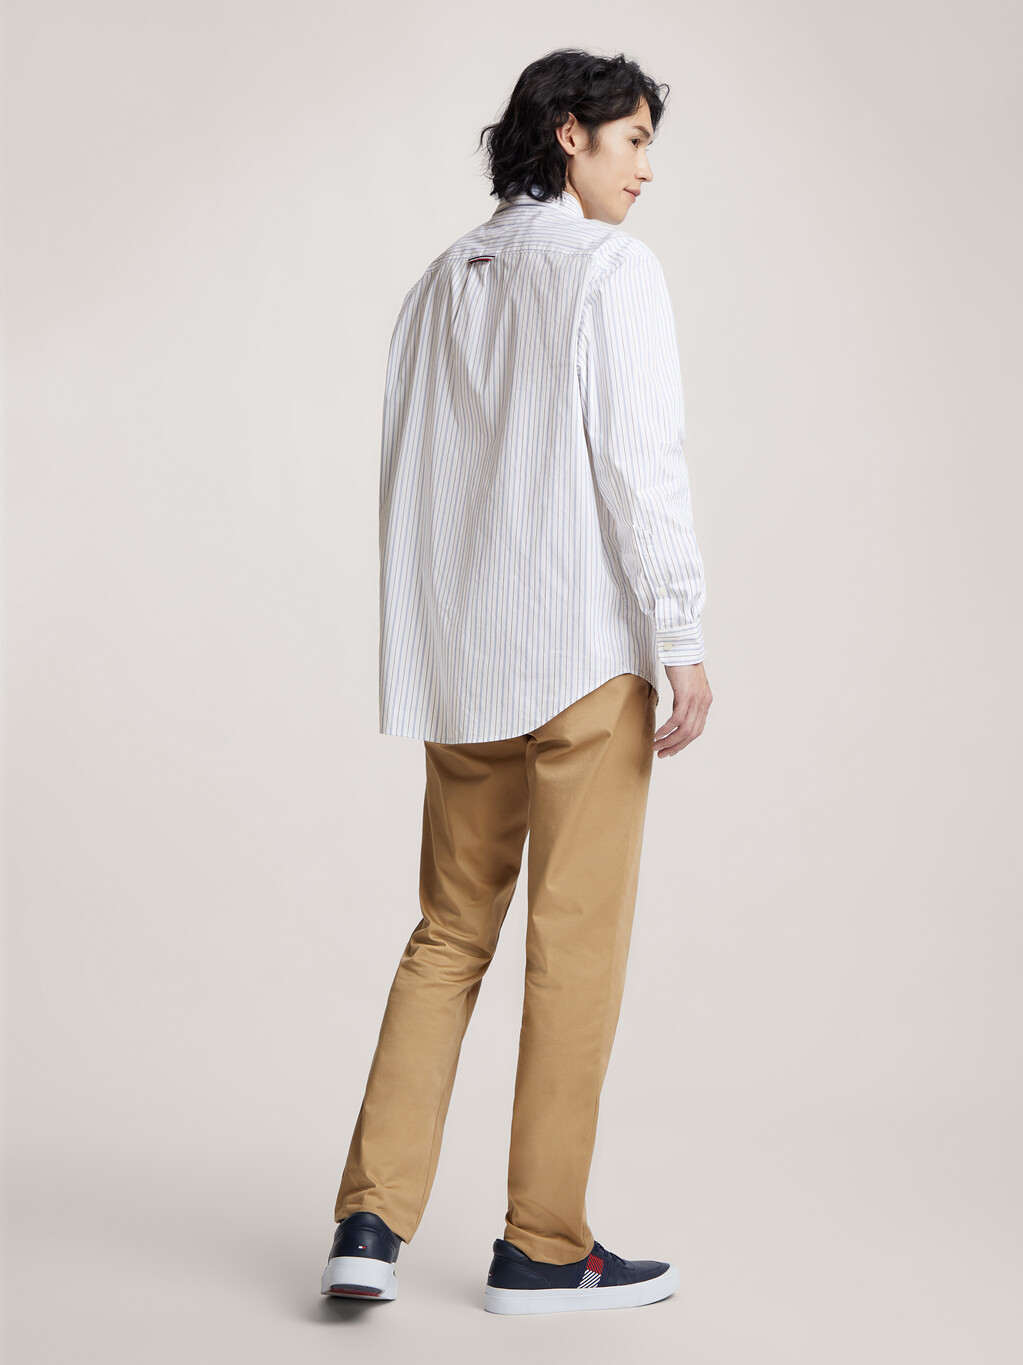 Classic Stripe Archive Fit Shirt, Optic White / Cloudy Blue / Multi, hi-res